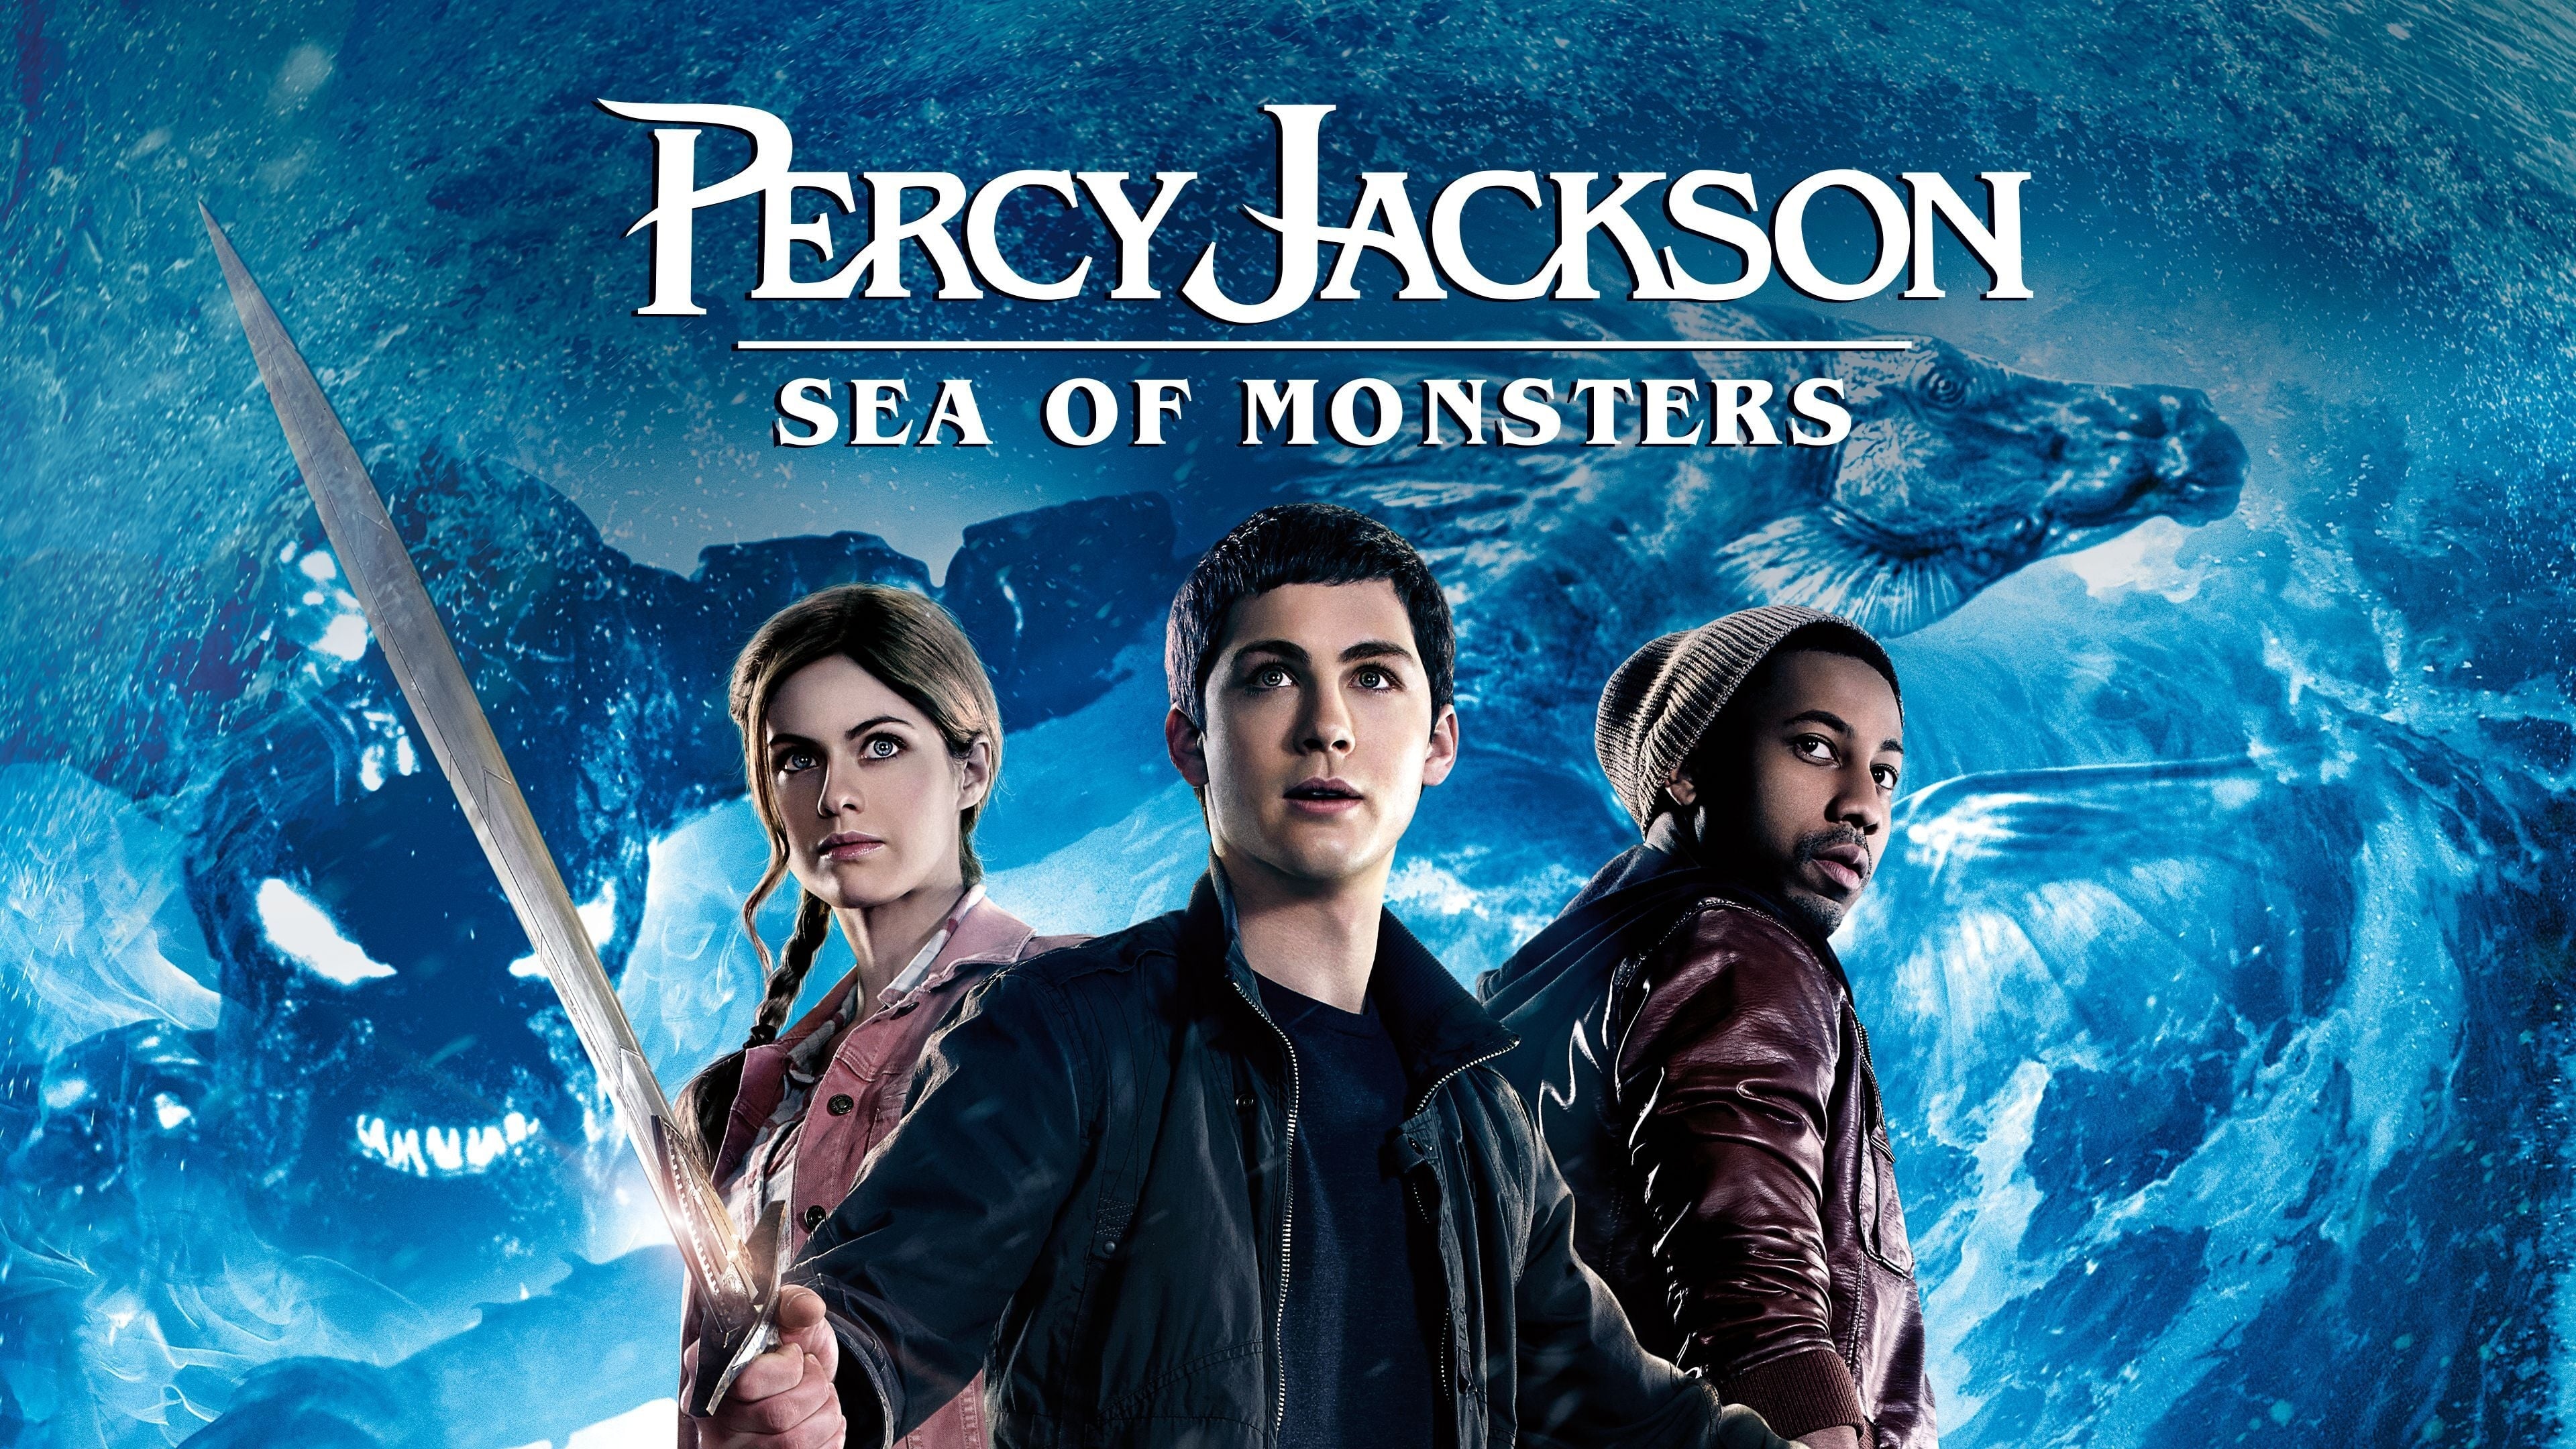 Logan Lerman (Percy Jackson), Percy Jackson movie series, Turkish dubs, Online film viewing, 3840x2160 4K Desktop